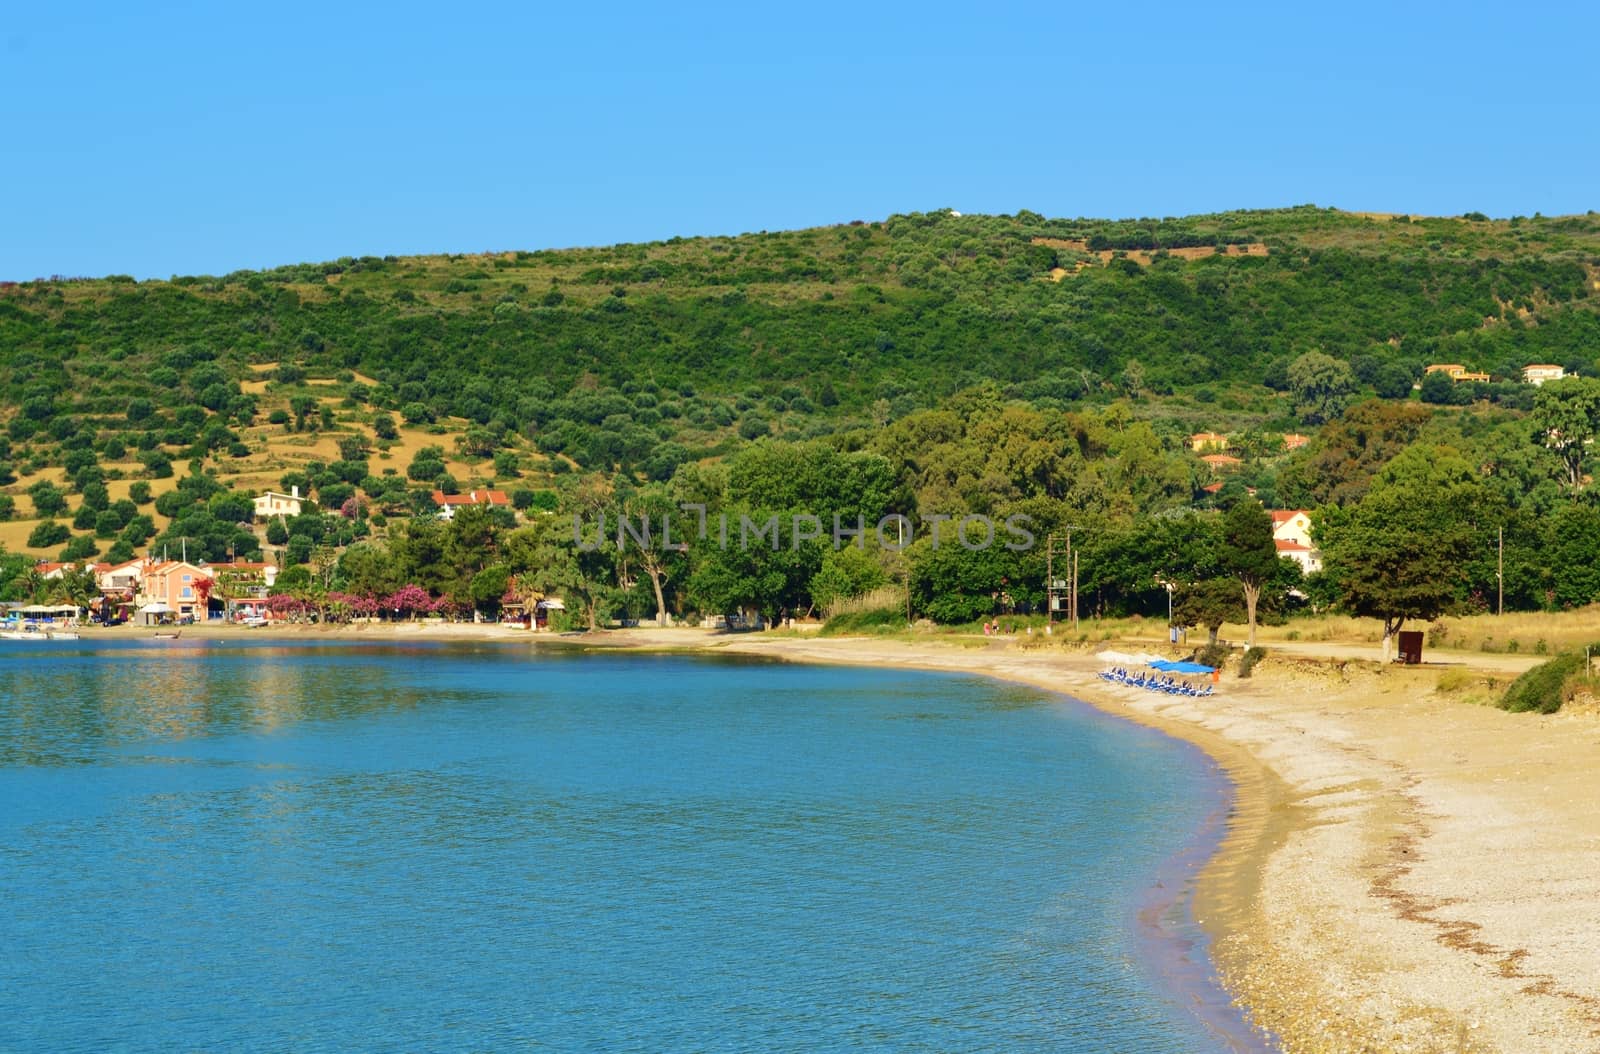 A peaceful beach scene, photographed at Katelios on the beautiful Greek Island of Kefalonia.